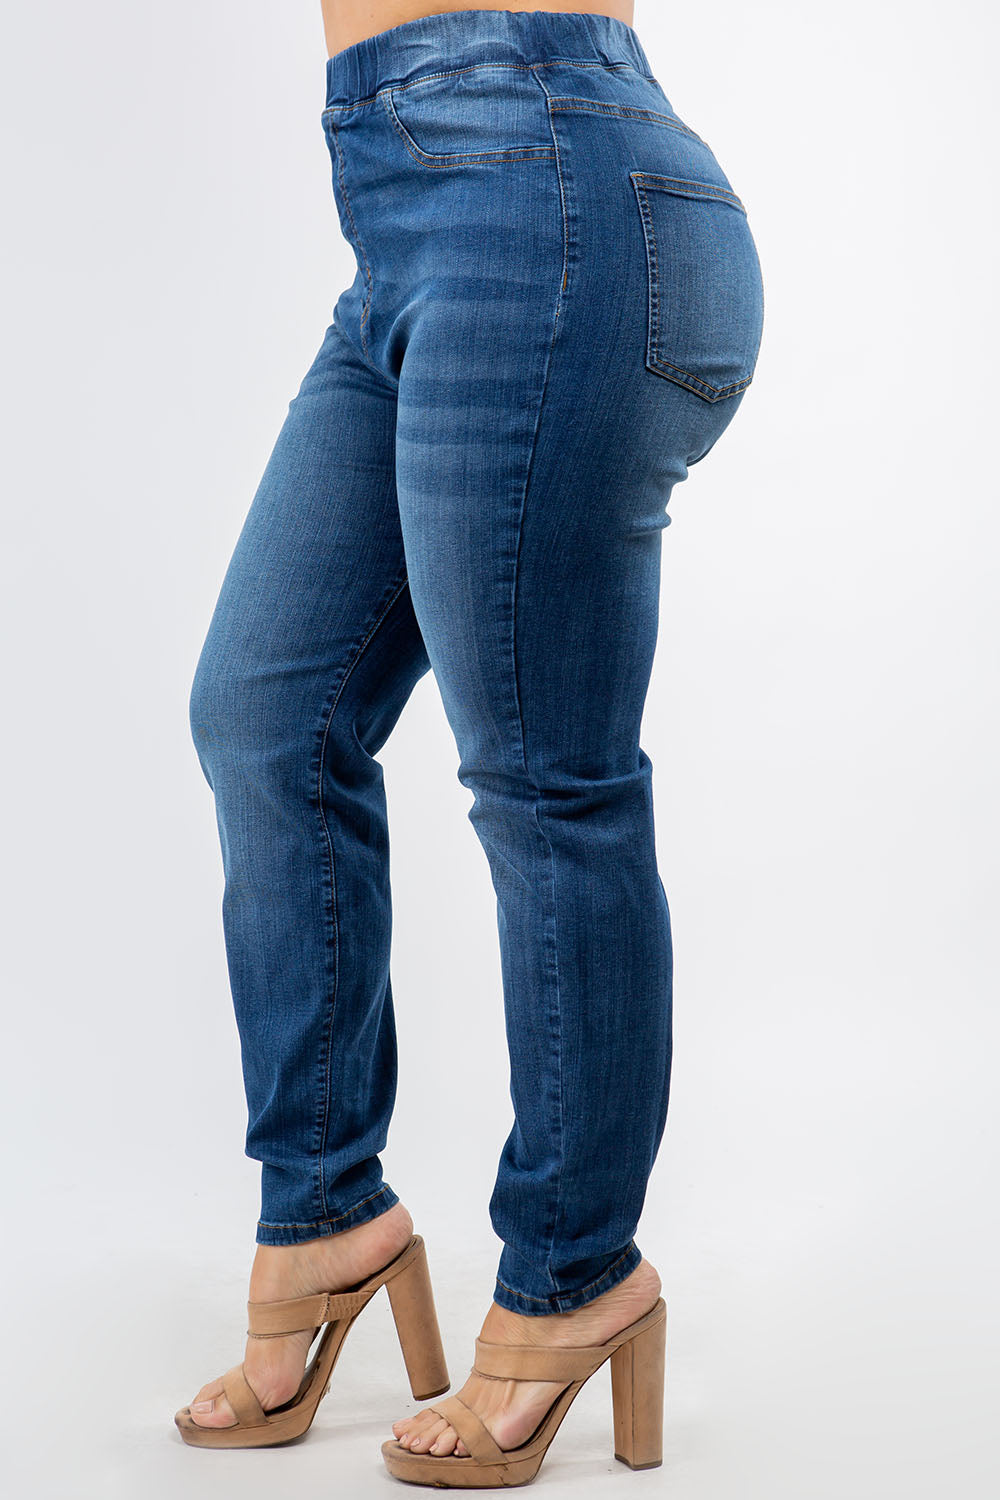 Premium Modal Fabric High Waist Elastic Band Skinny Jeans - Plus Size